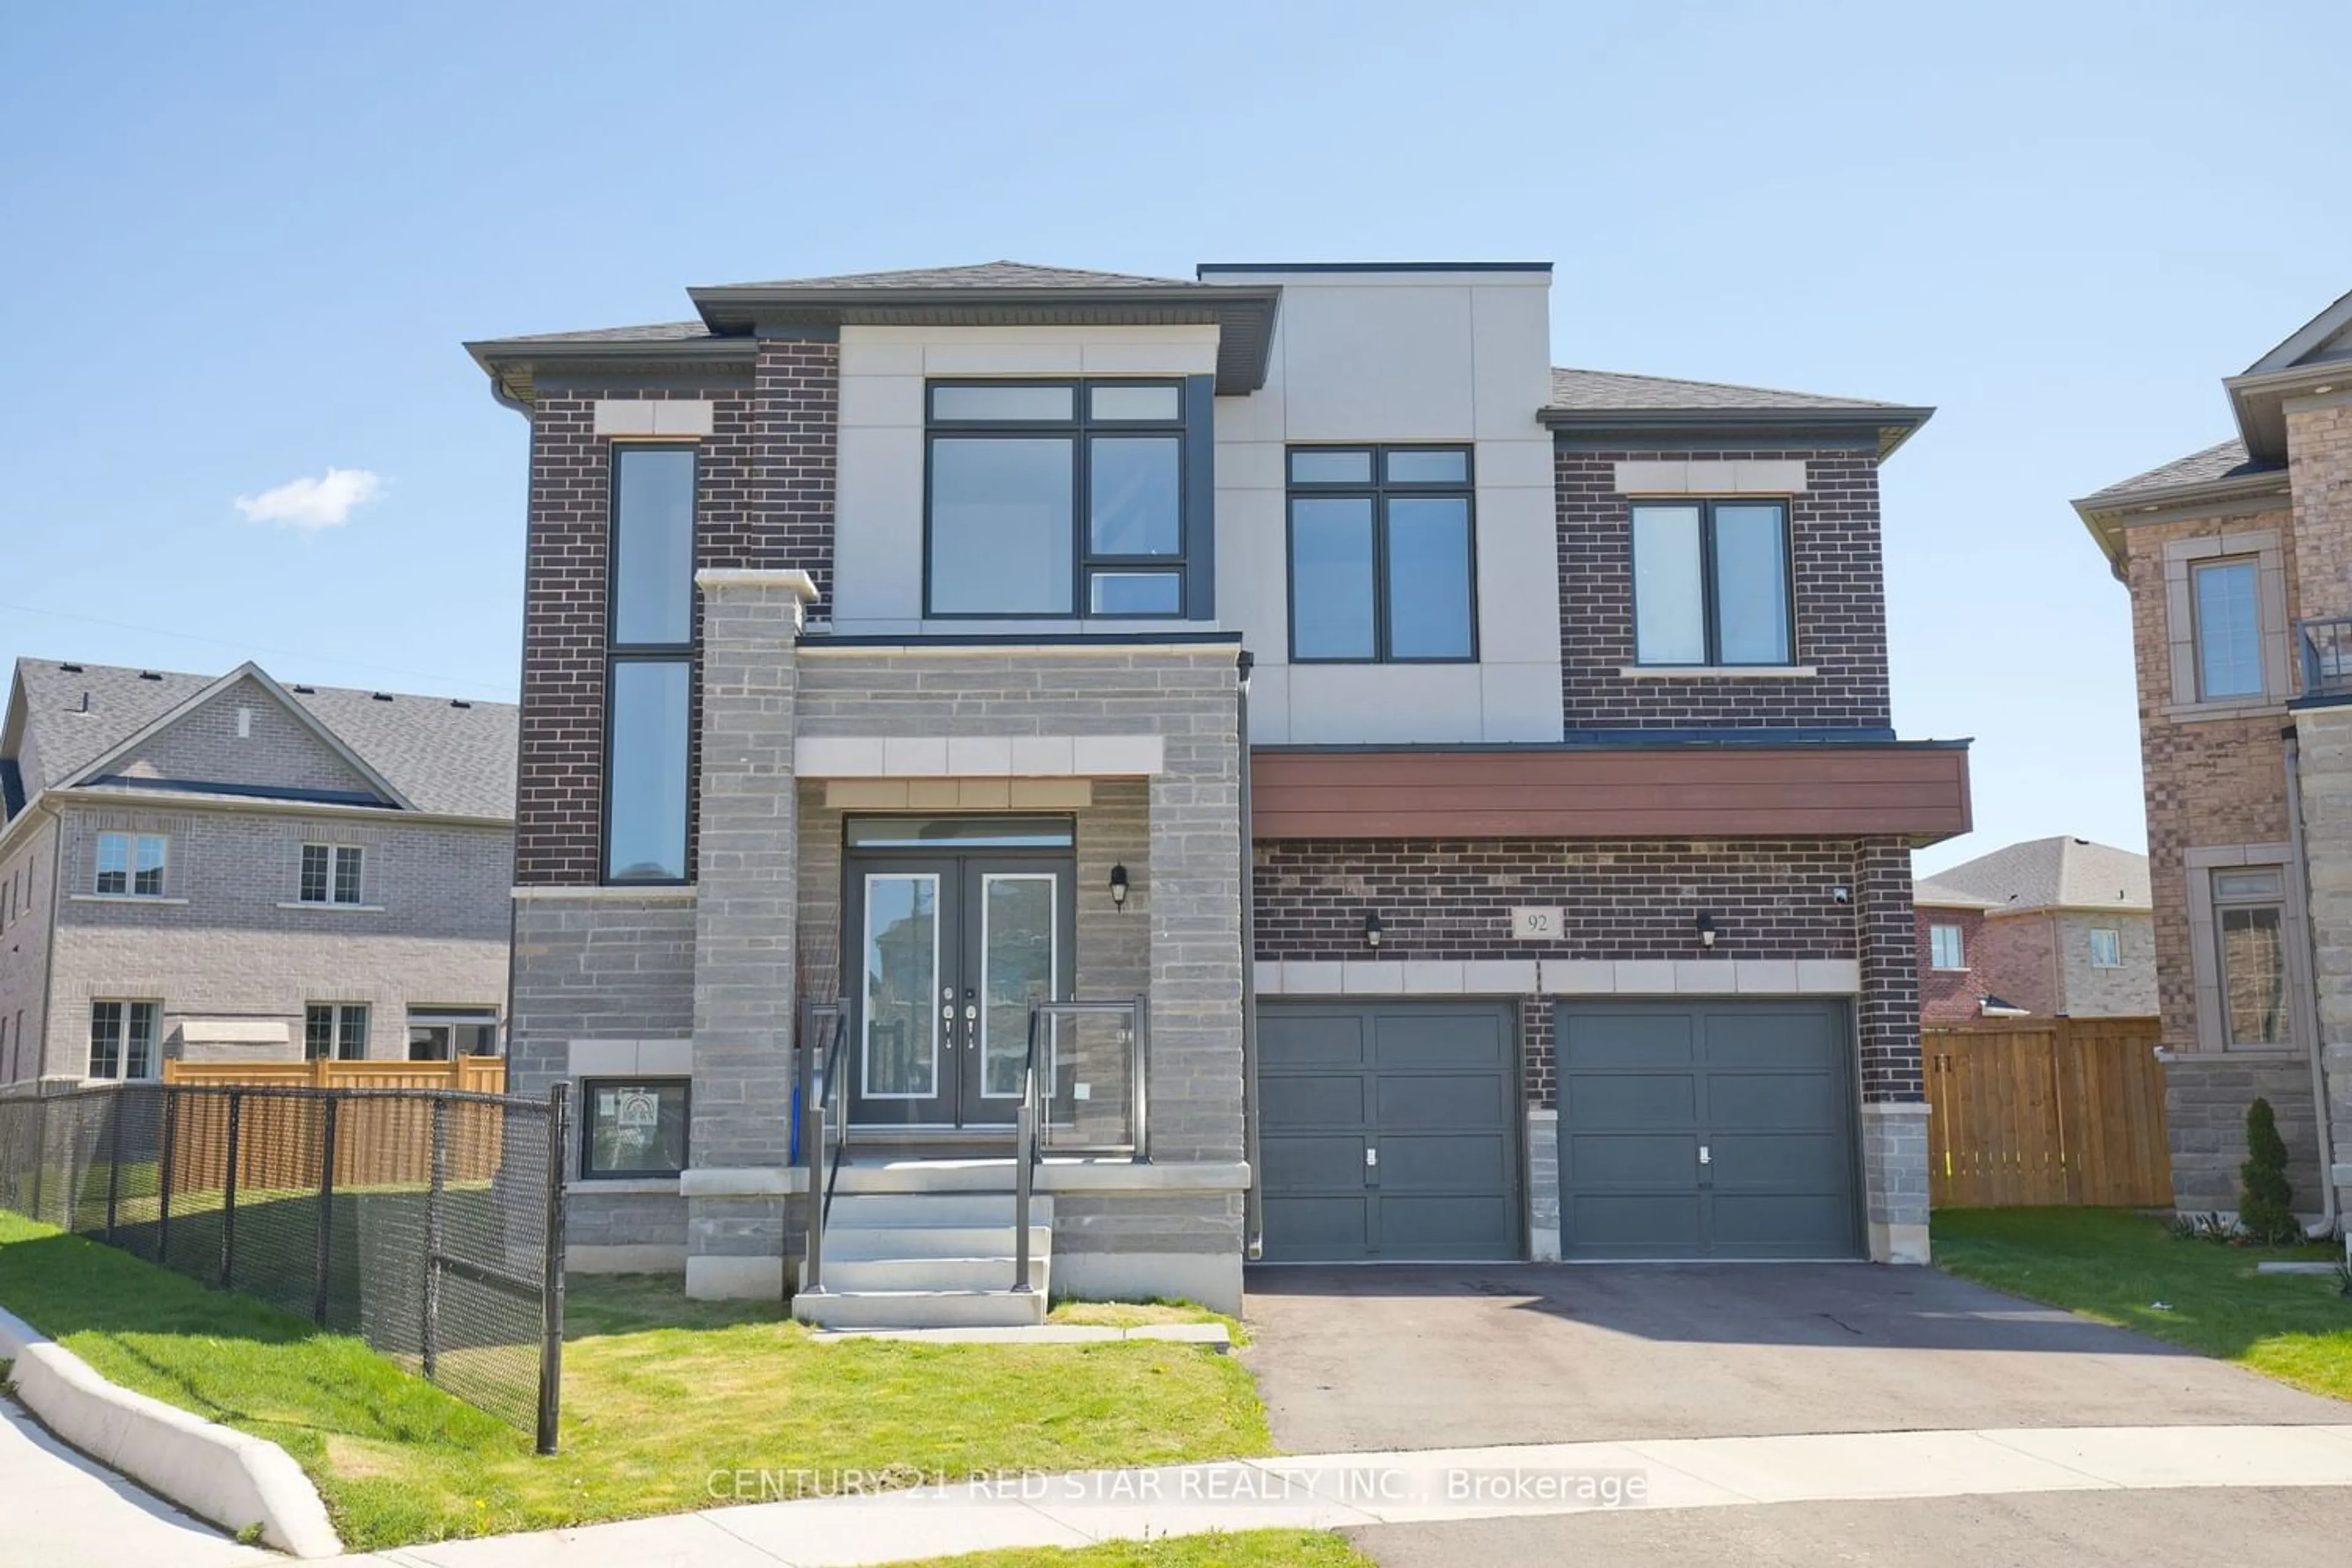 Home with brick exterior material for 92 Elstone Pl, Hamilton Ontario L8B 1Y9